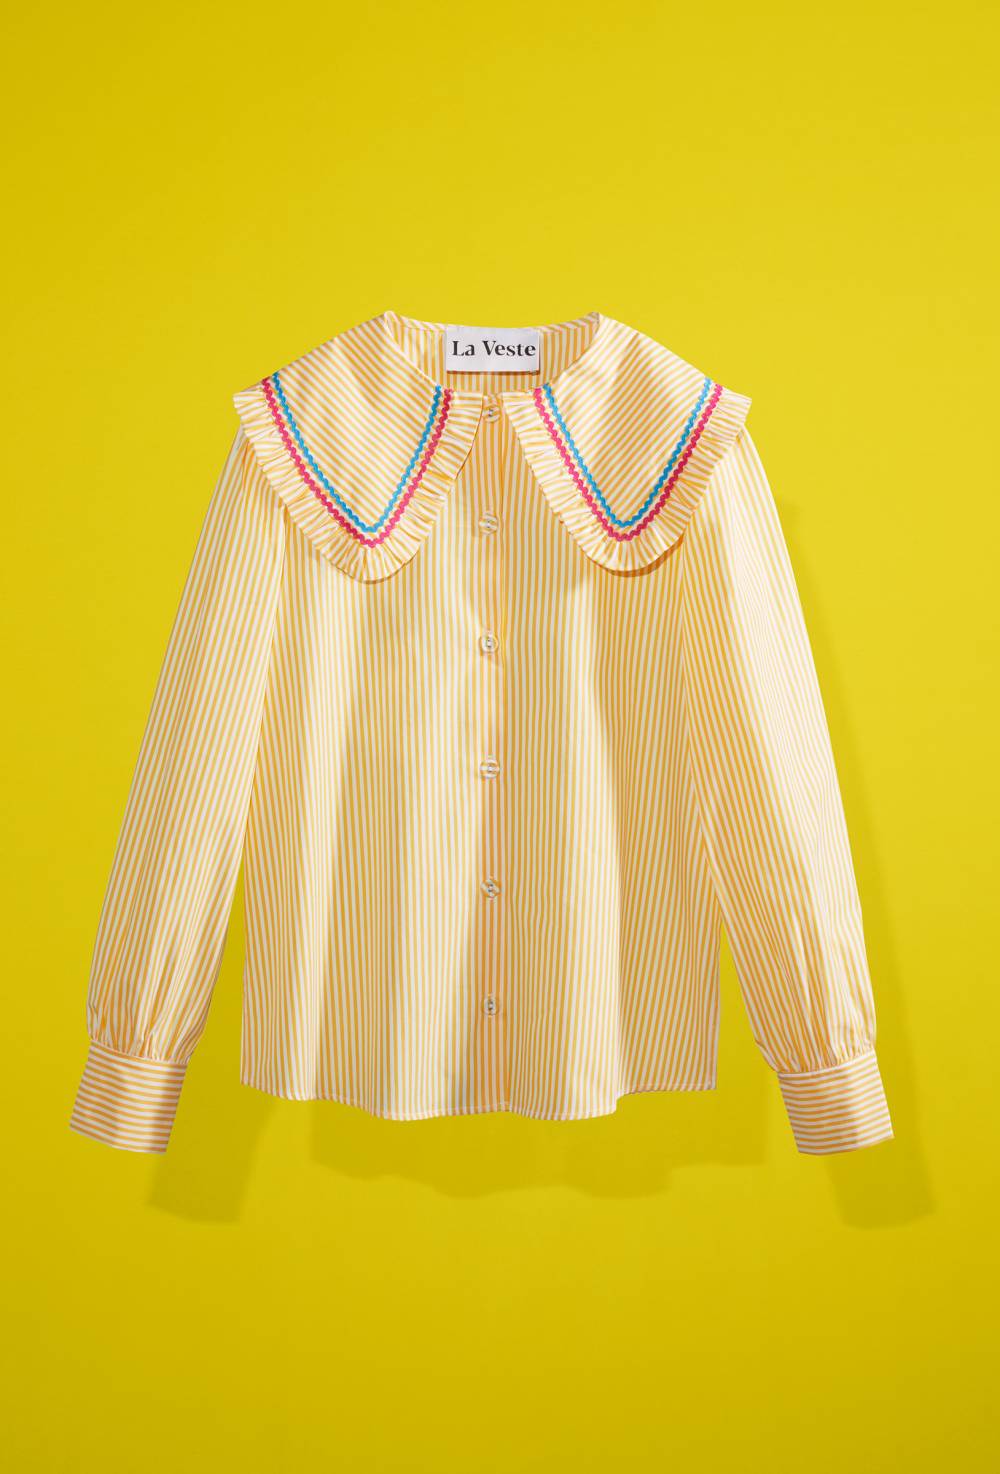 School shirt in striped yellow by La Veste image #1